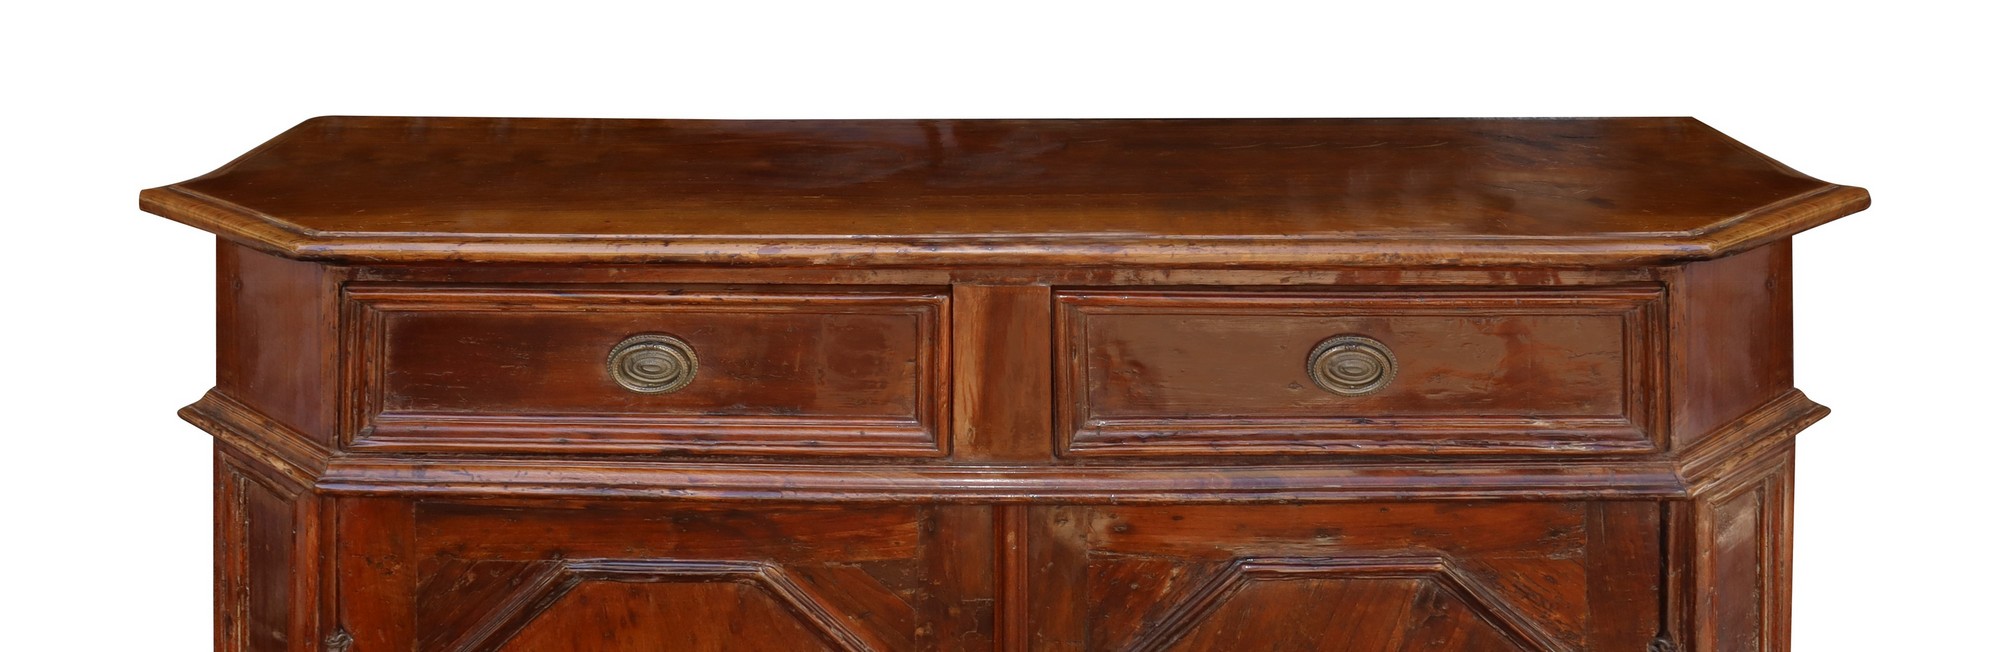 Walnut cabinet, XVIII century - Image 2 of 6